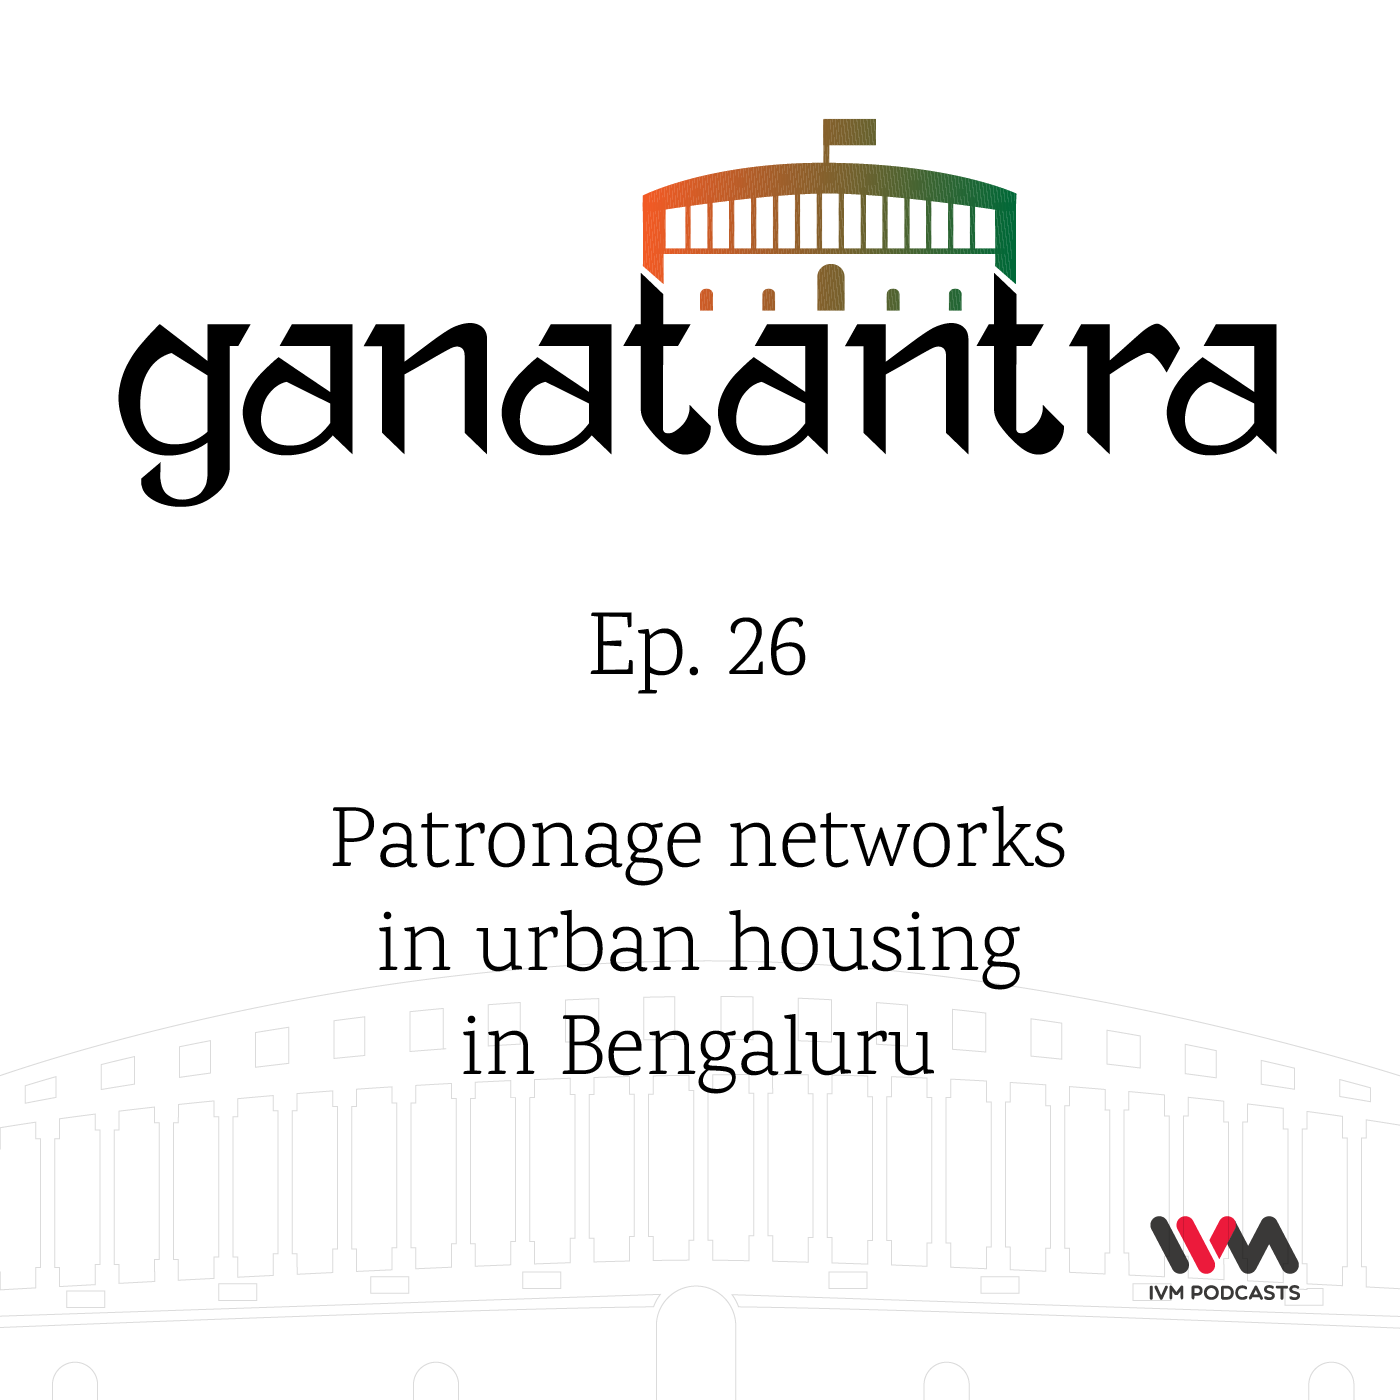 Ep. 26: Patronage networks in urban housing in Bengaluru